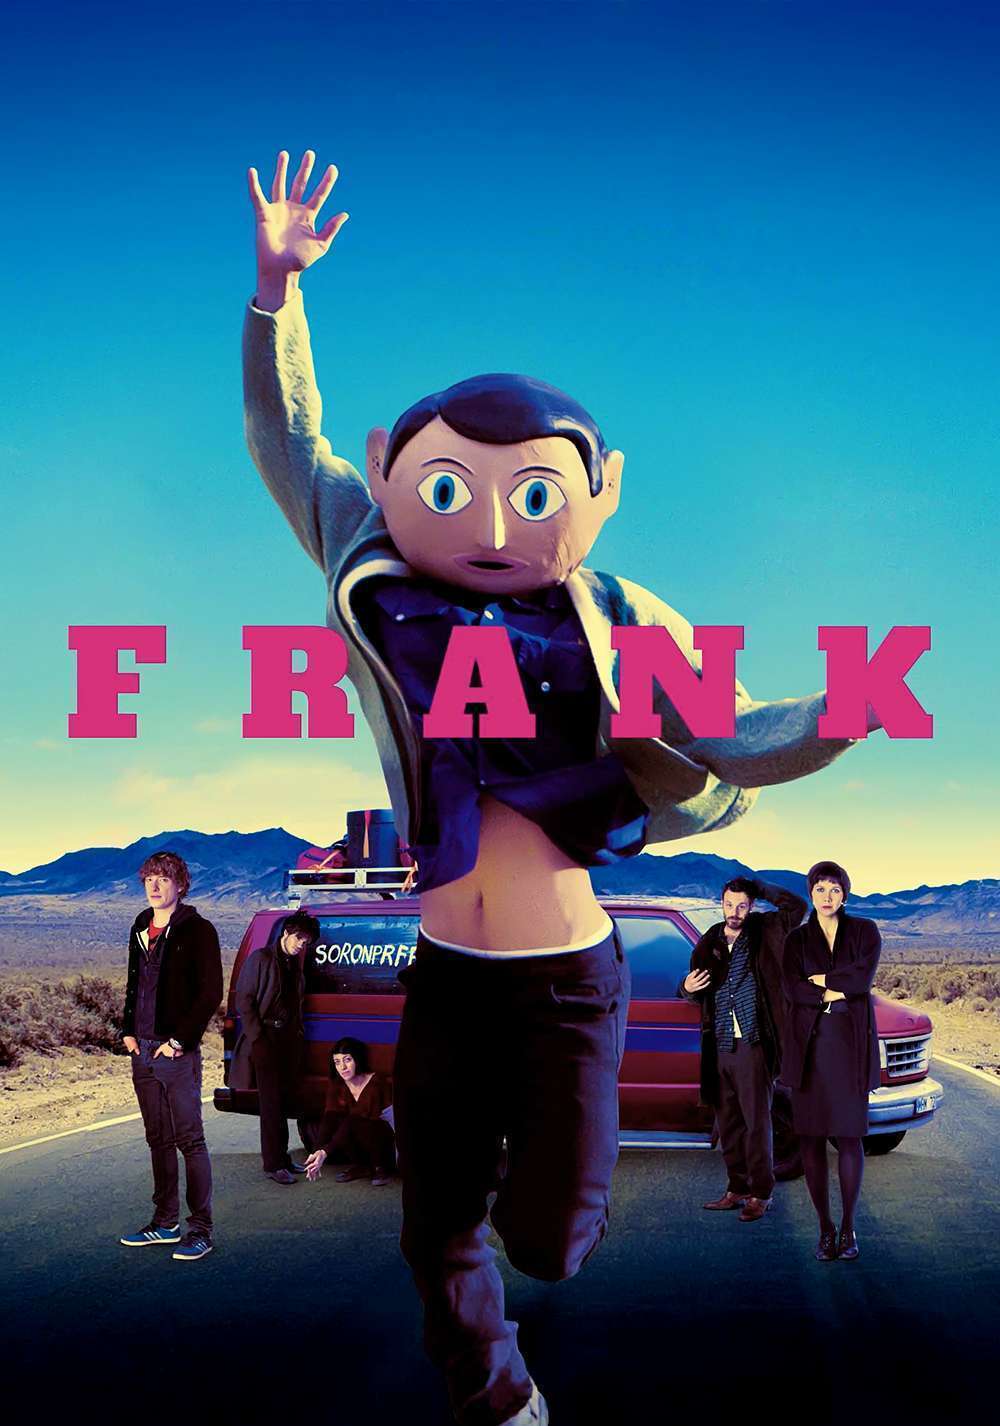 Frank poster